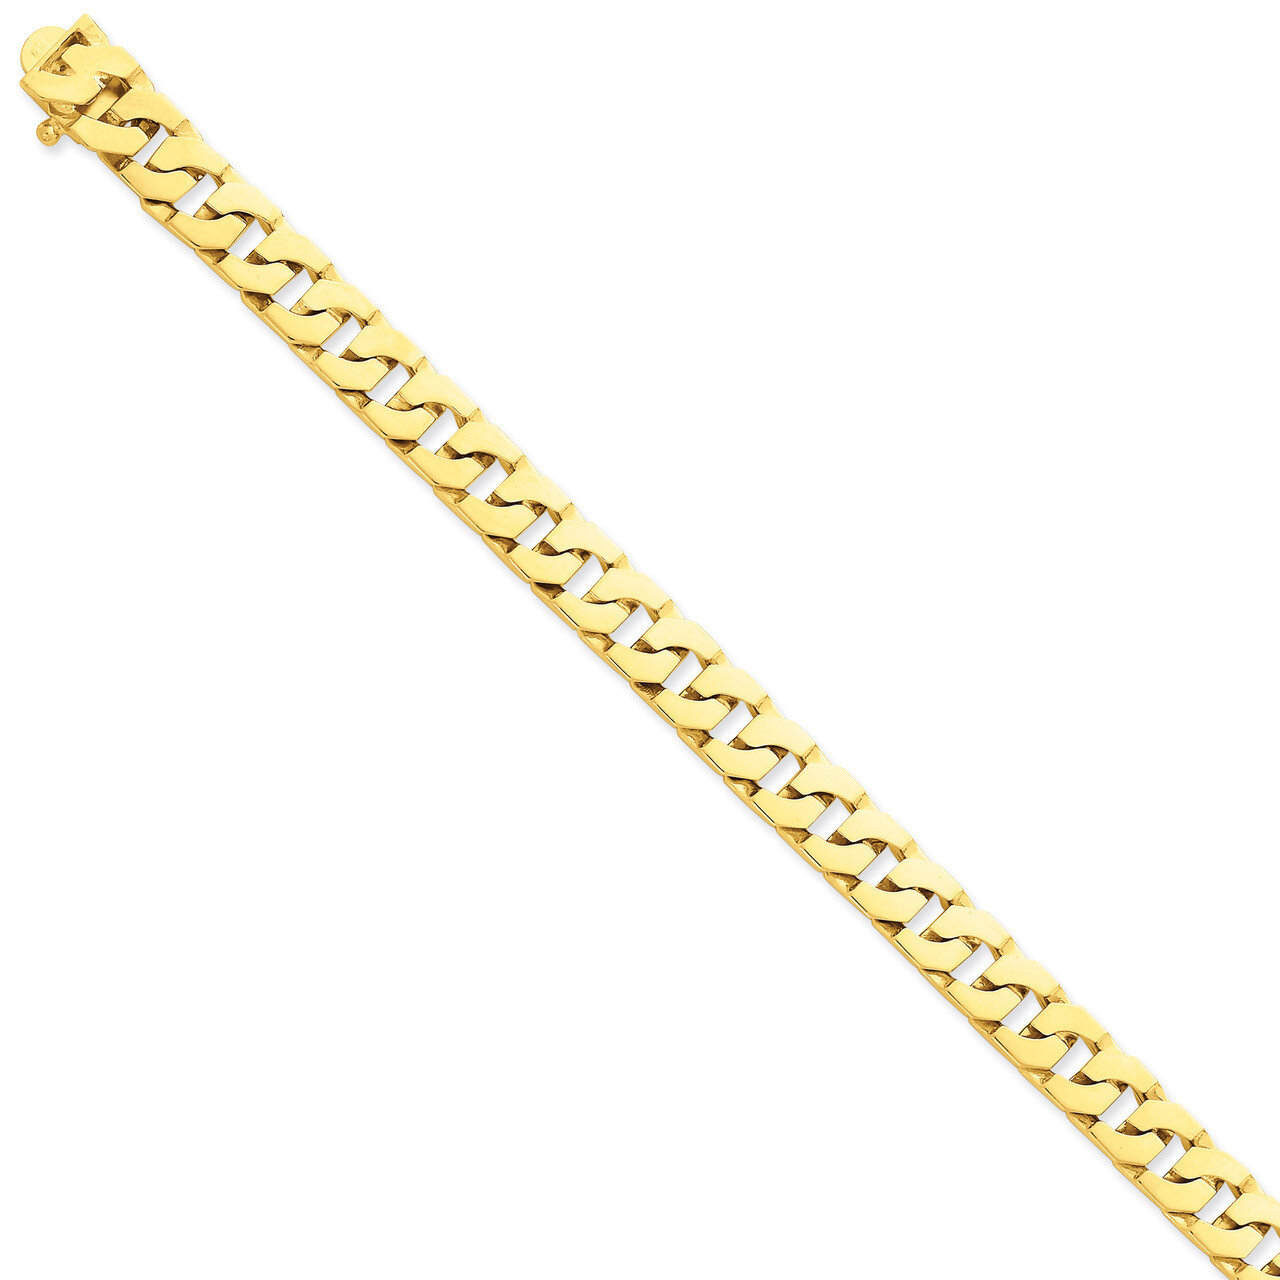 10mm Hand-Polished Fancy Link Chain 20 Inch 14k Gold LK138-20